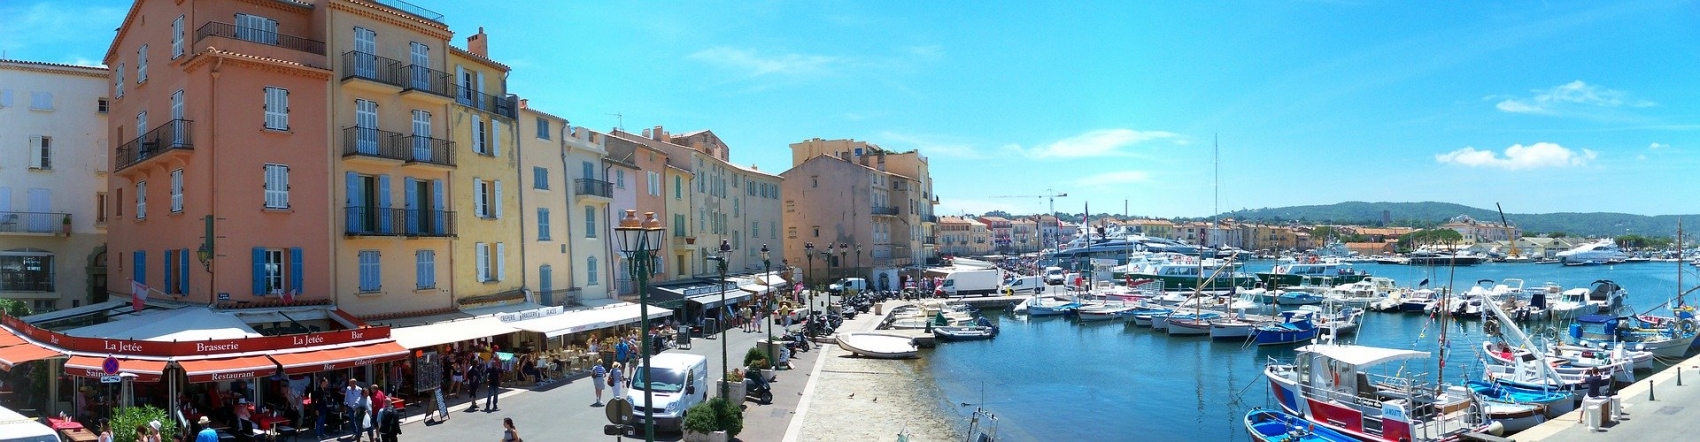 Côte d'Azur - La Prestigieuse